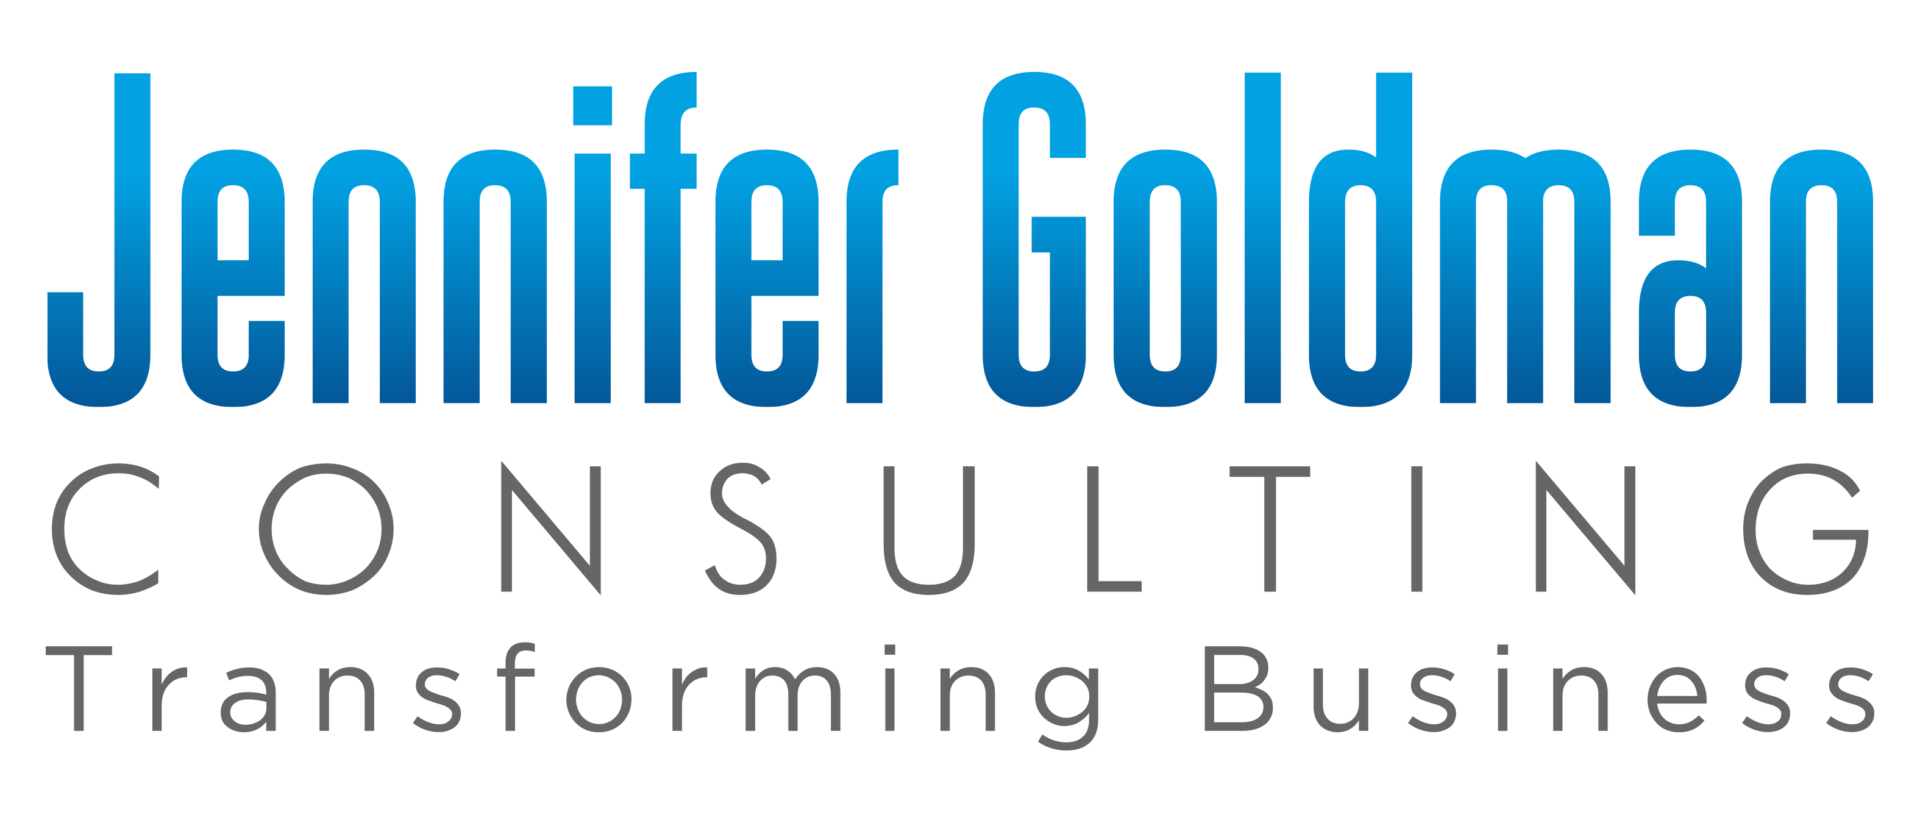 Jennifer Goldman Consulting Logo